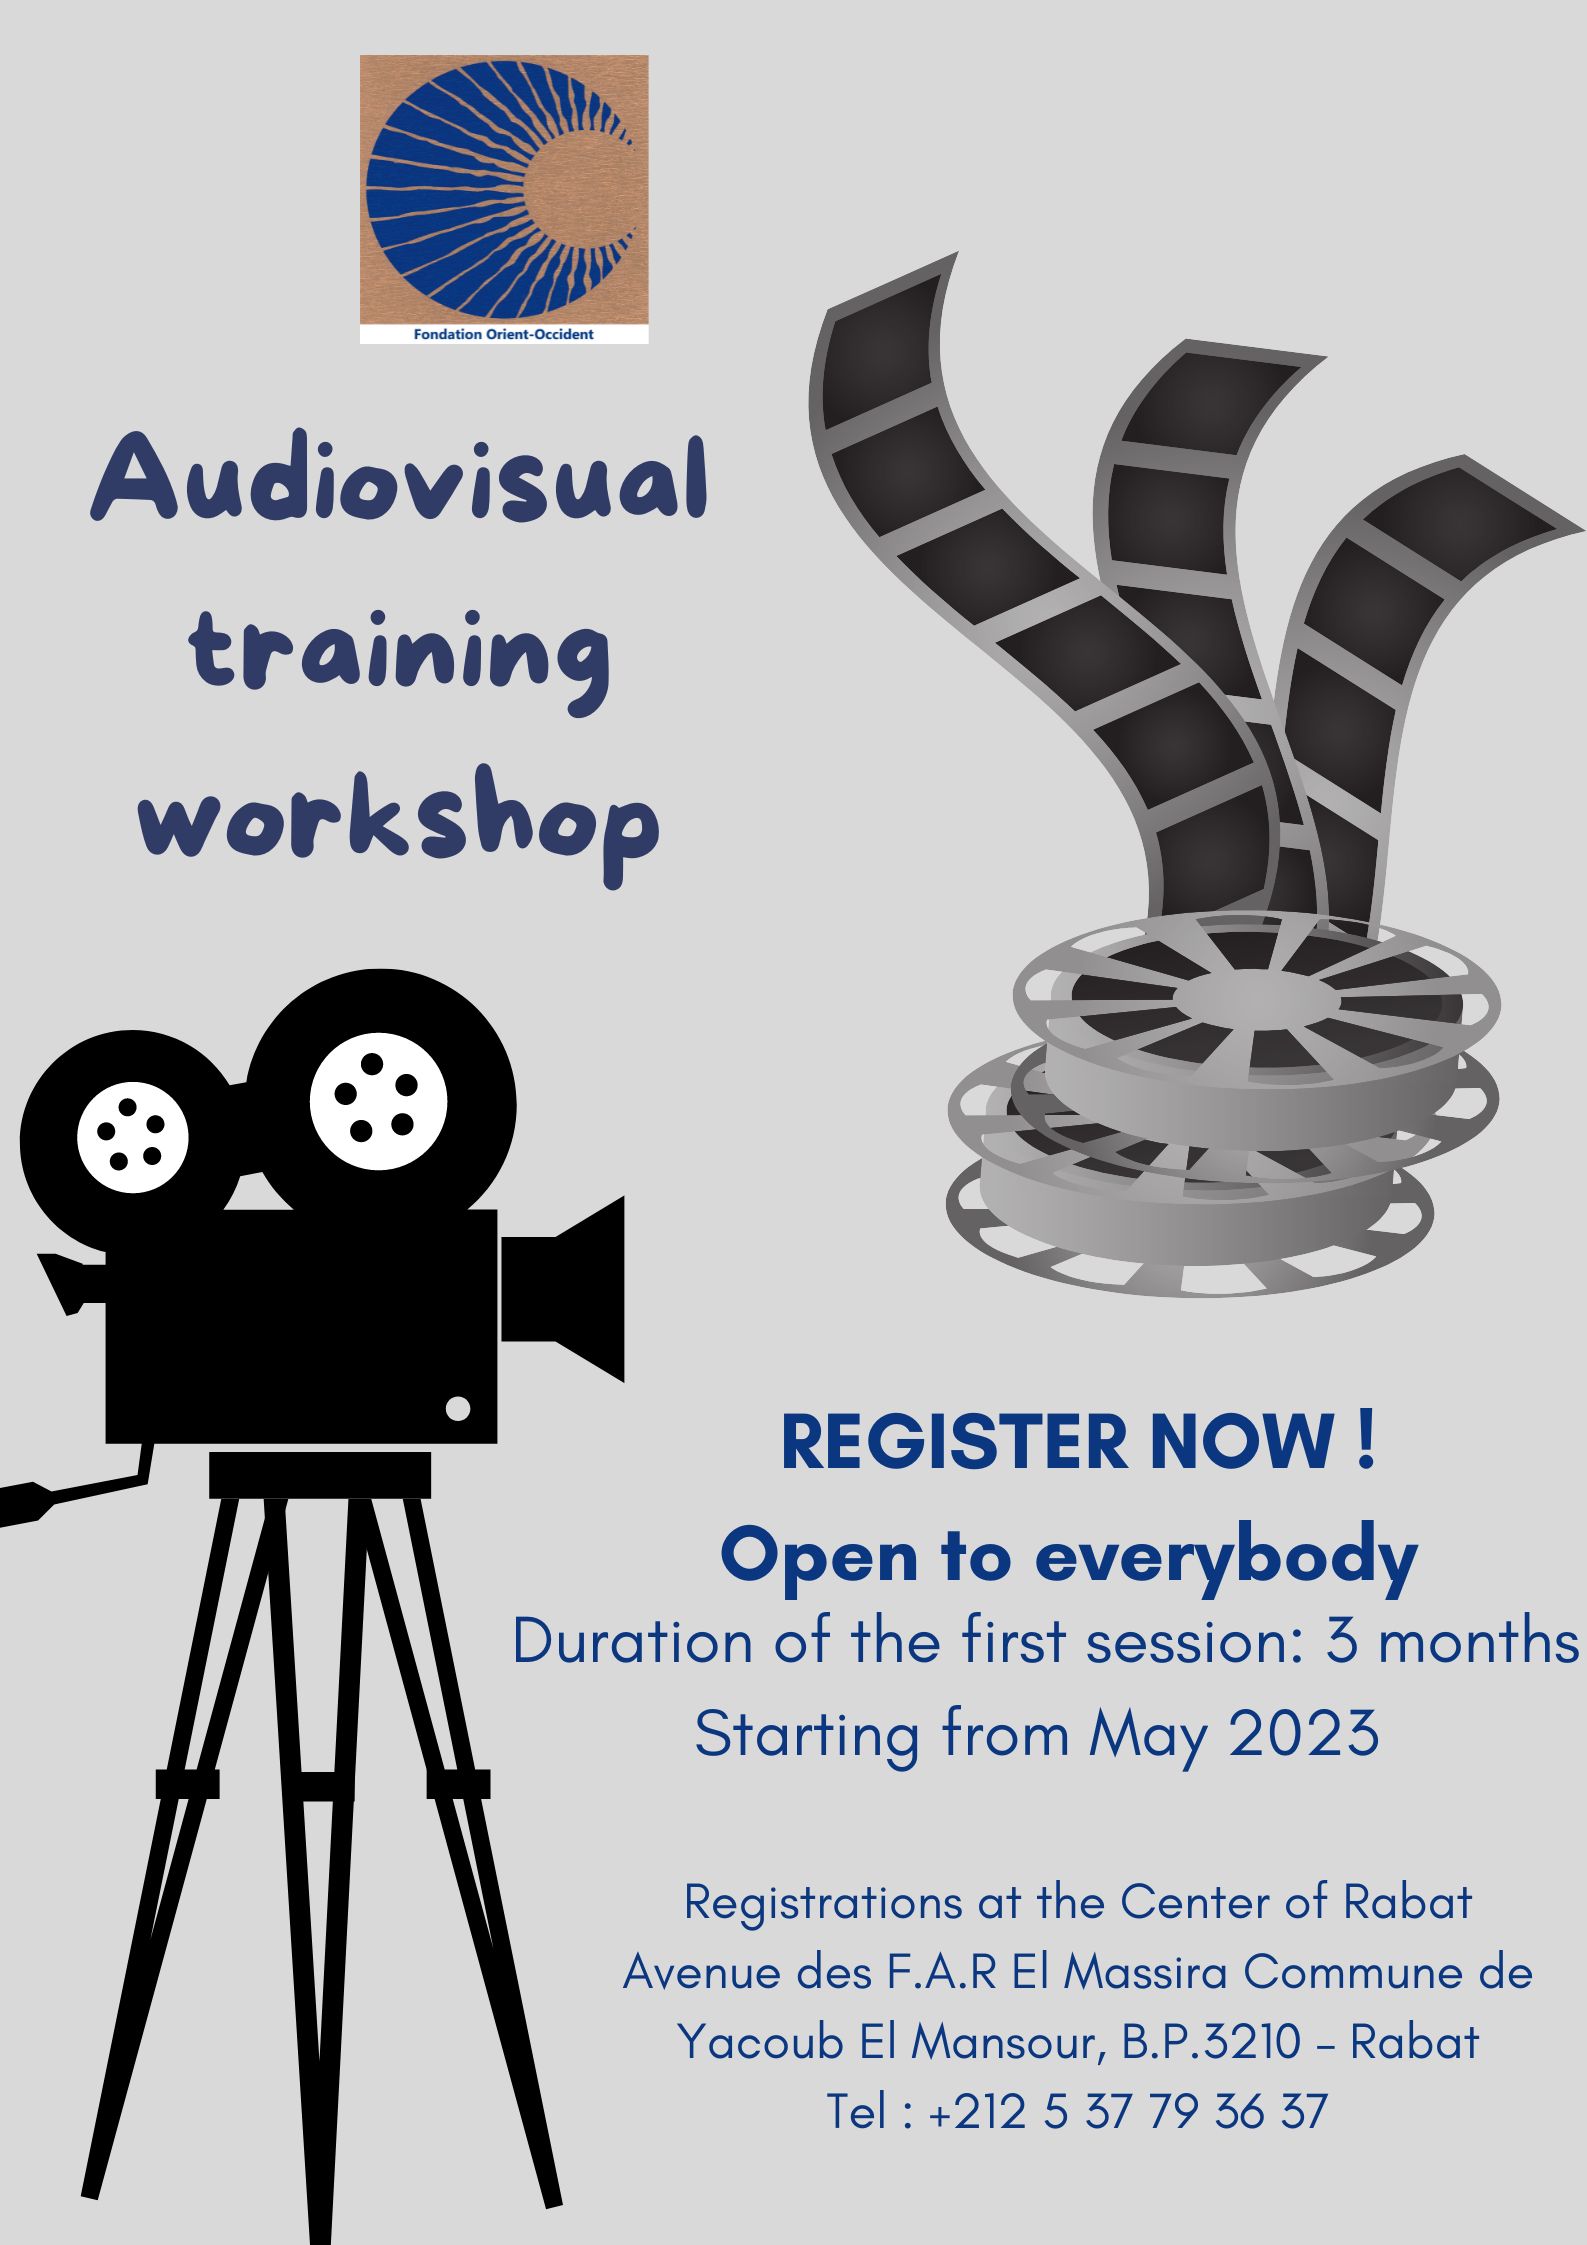 Audiovisual training workshop